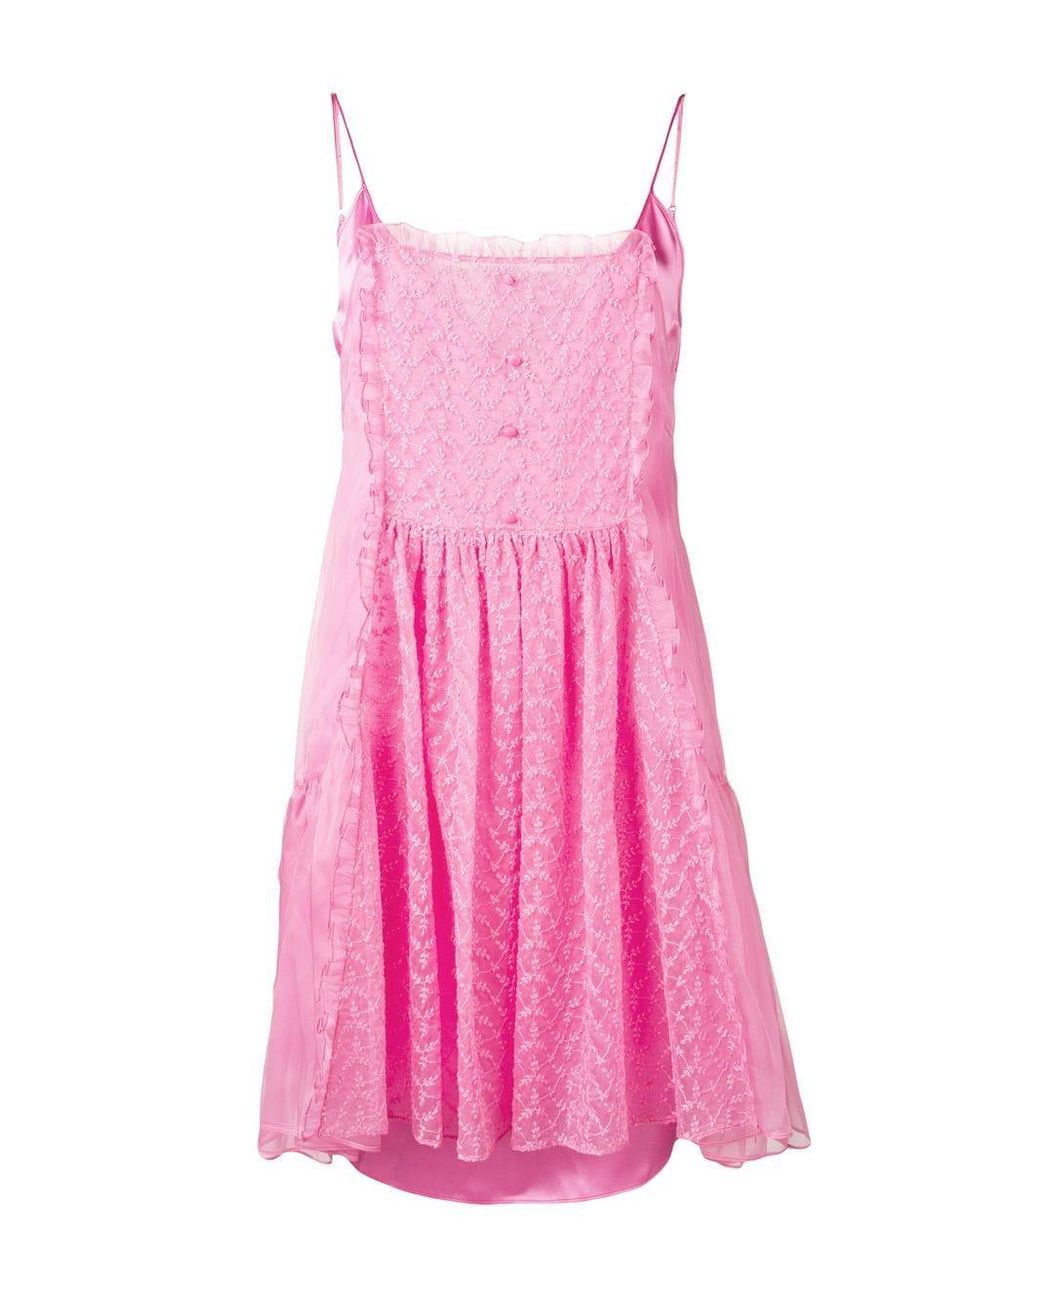 Stella McCartney Lace Panel Slip Dress in Pink - Lyst